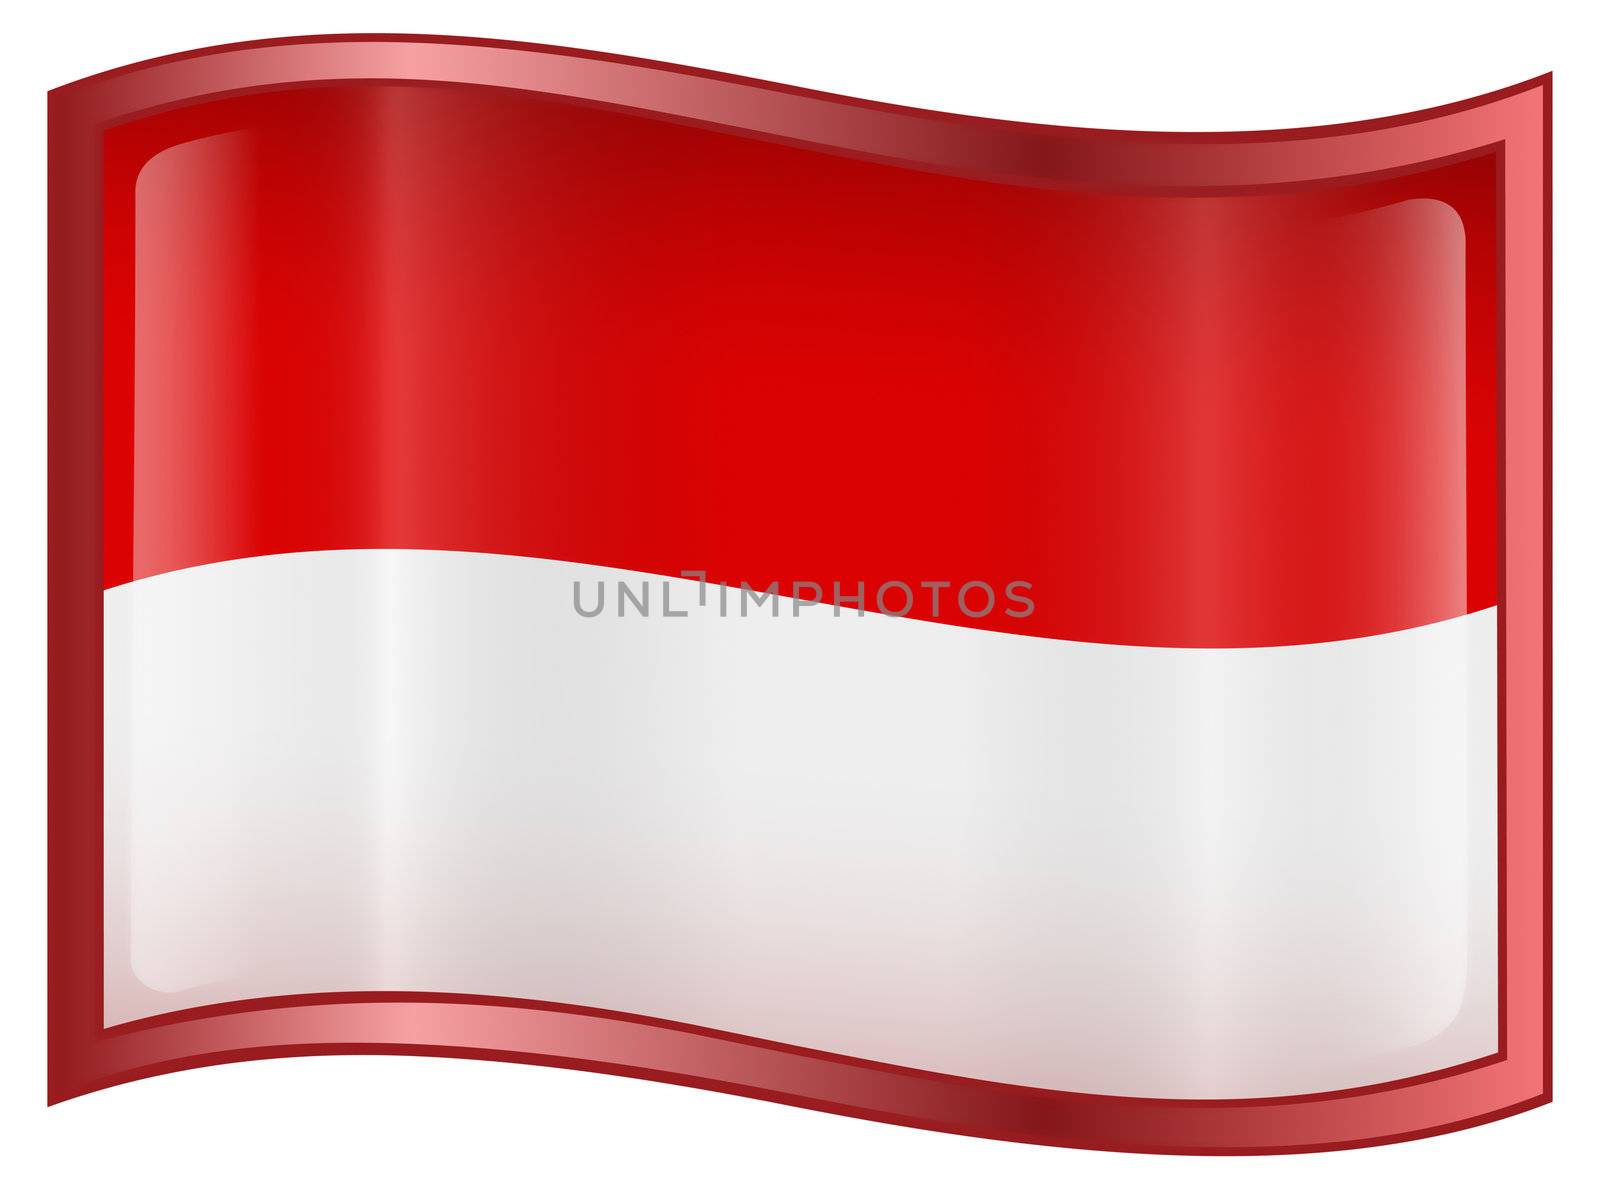 Indonesia Flag Icon, isolated on white background.